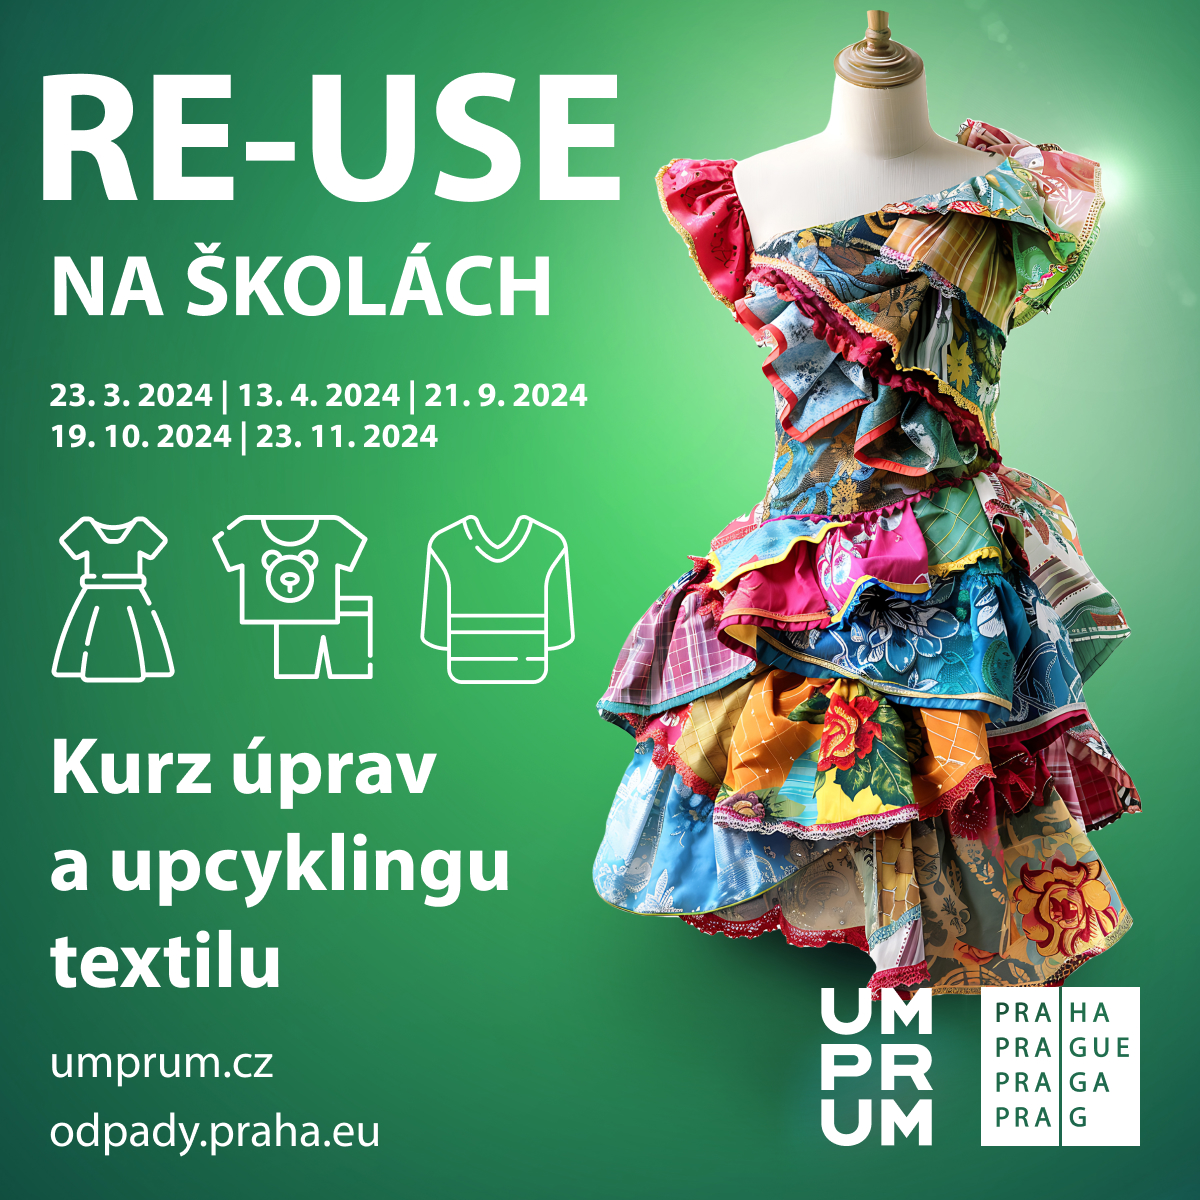 Re-use textil